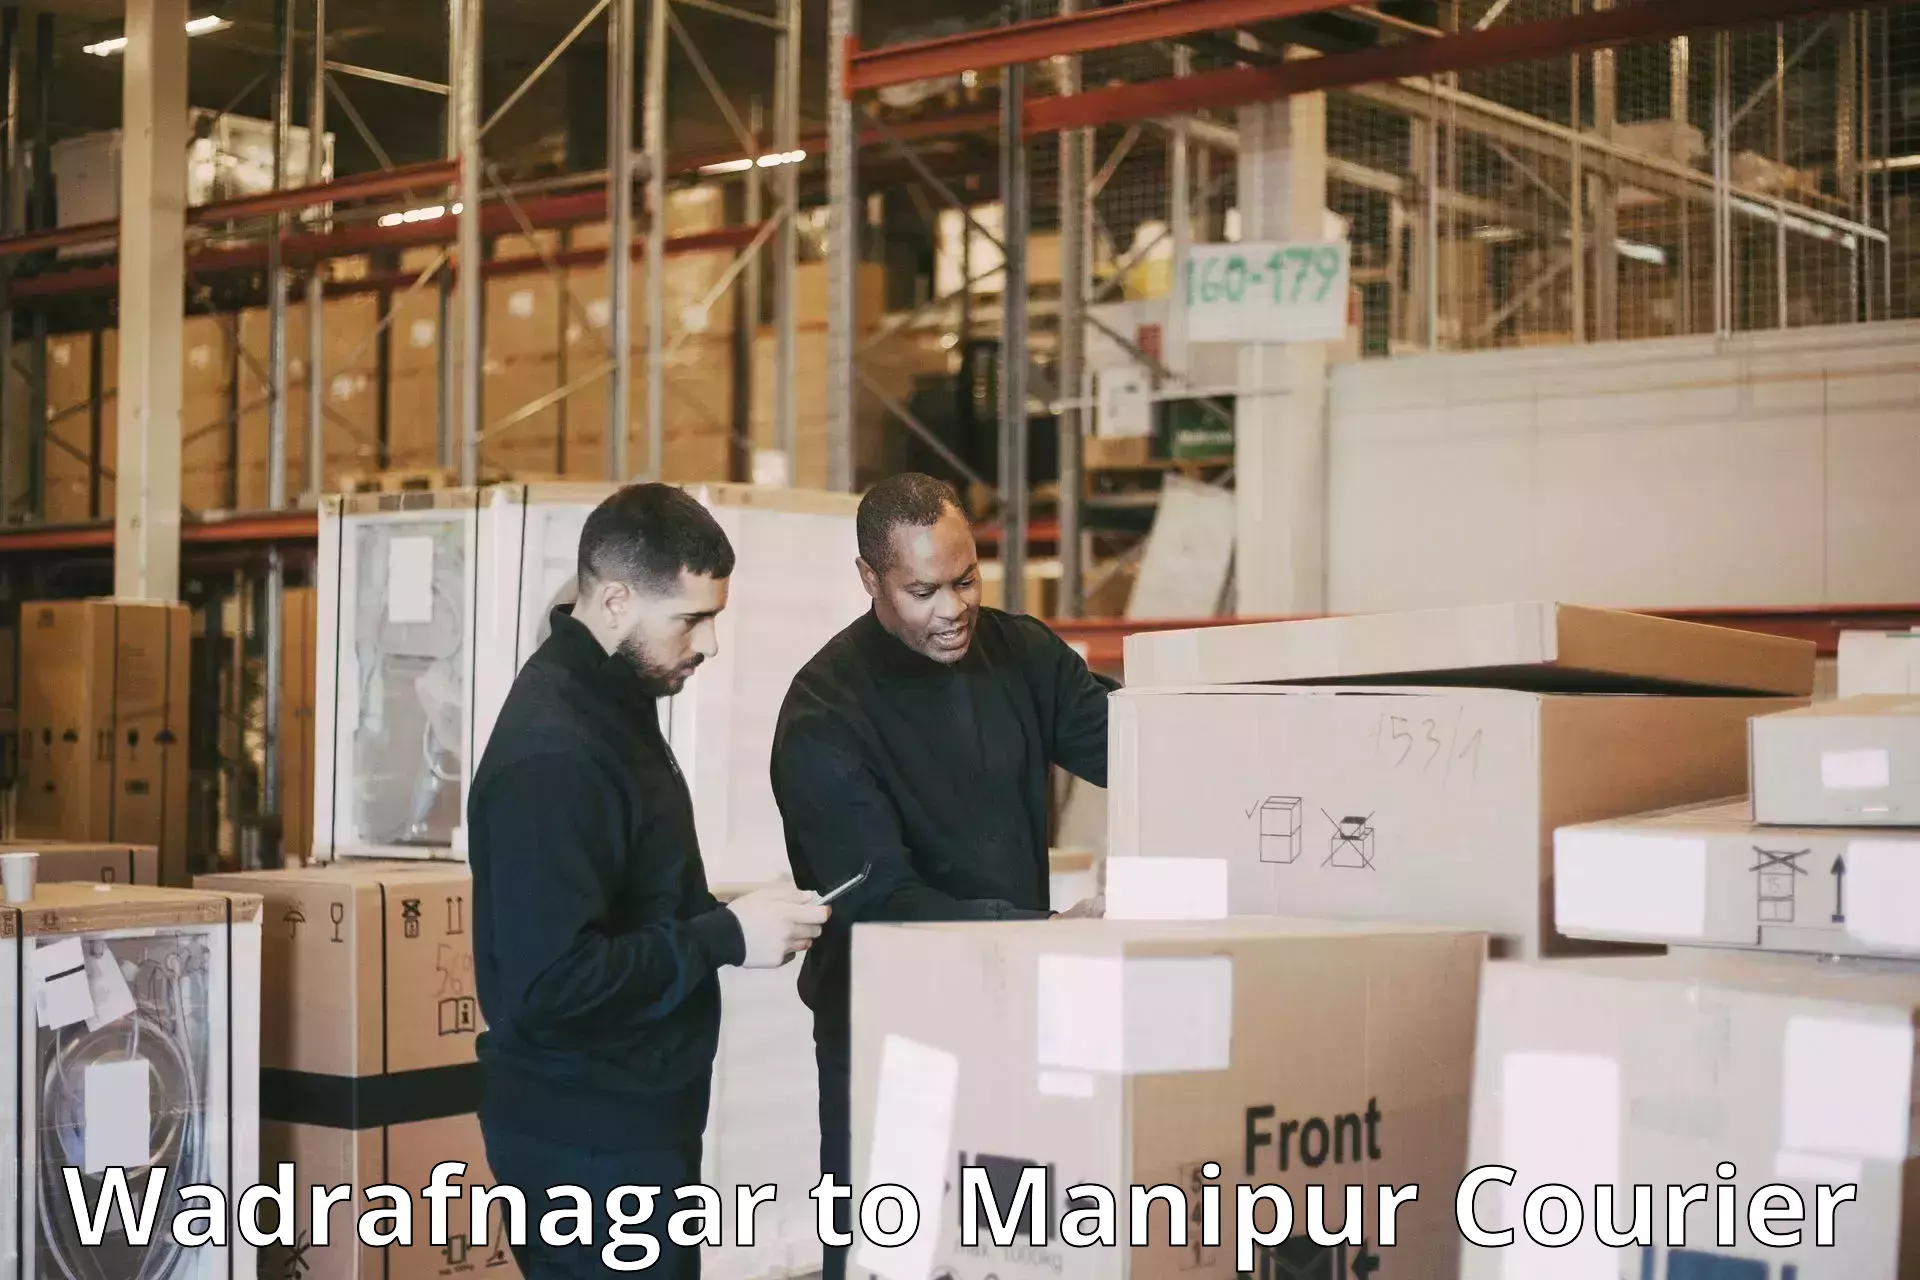 Sustainable shipping practices Wadrafnagar to Churachandpur